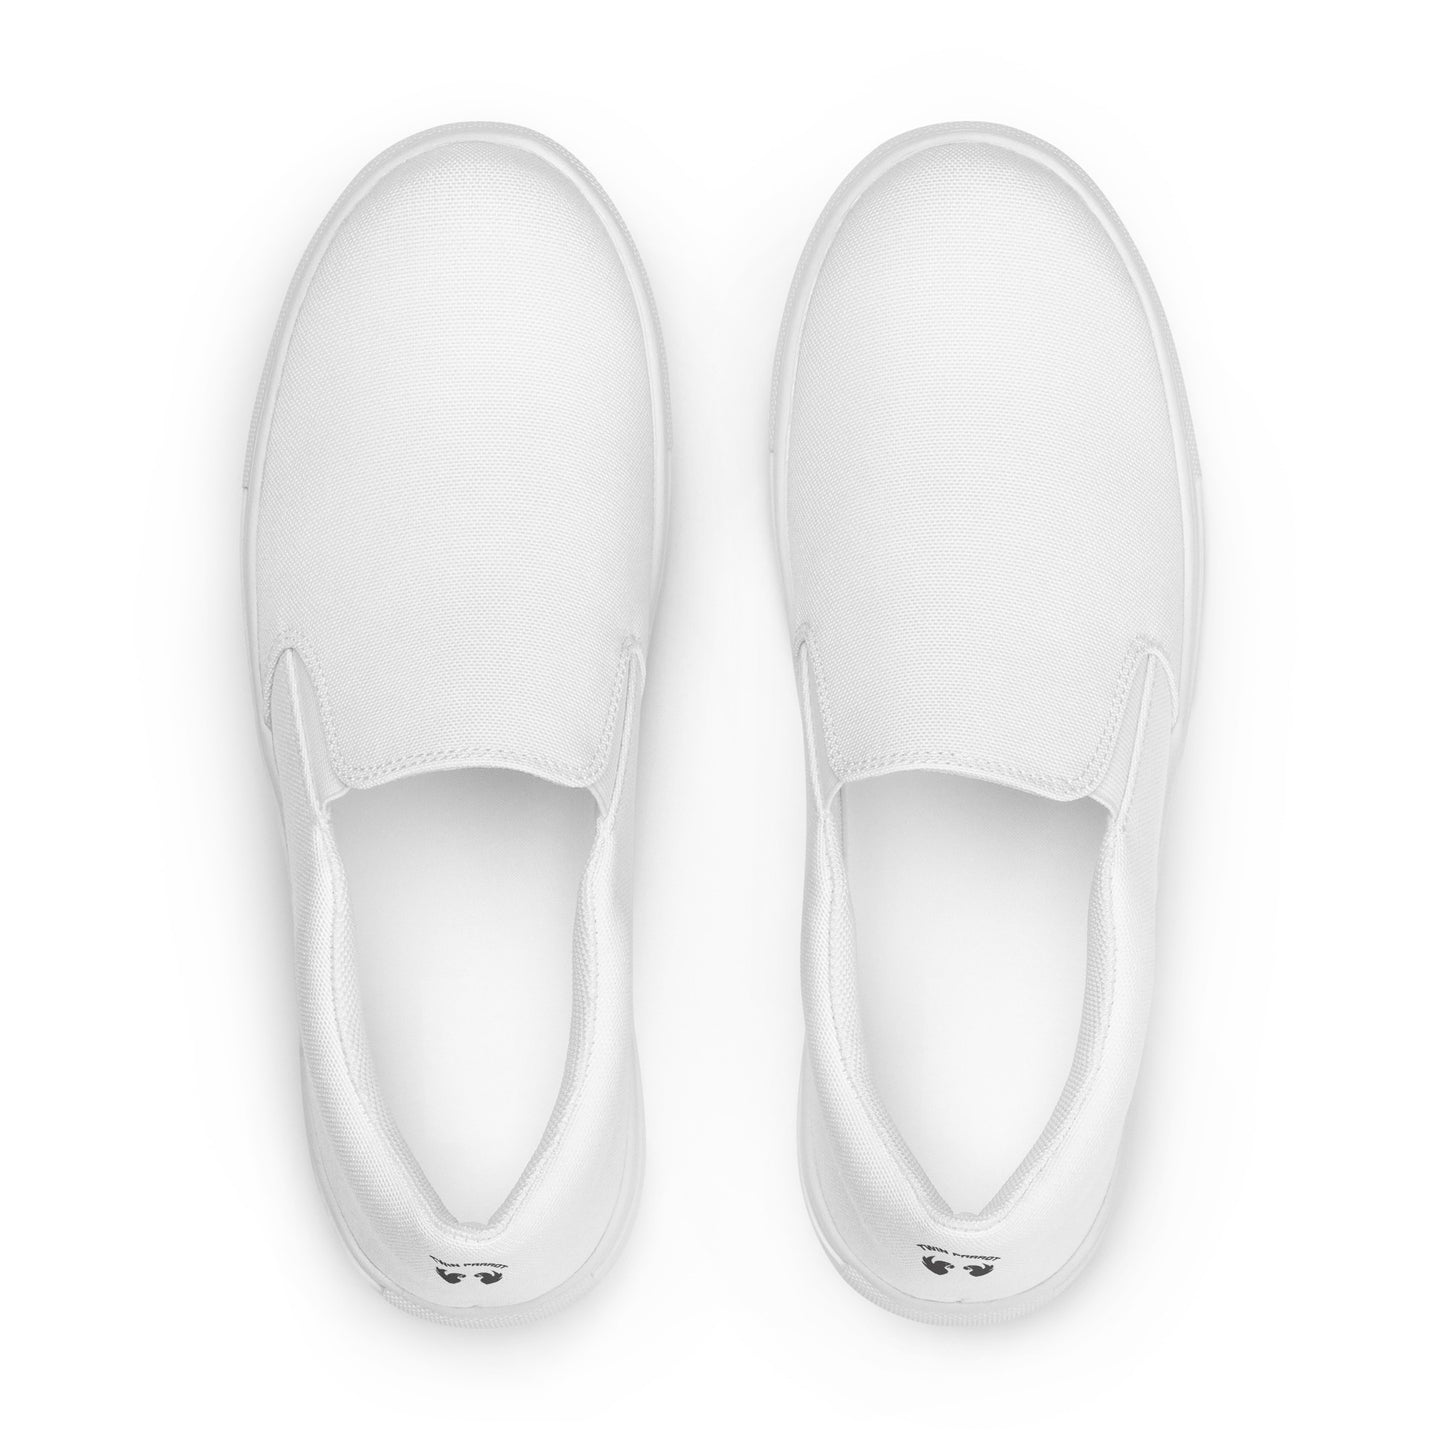 Cloudwalkers: Men's Premium Canvas Slip-On Sneakers